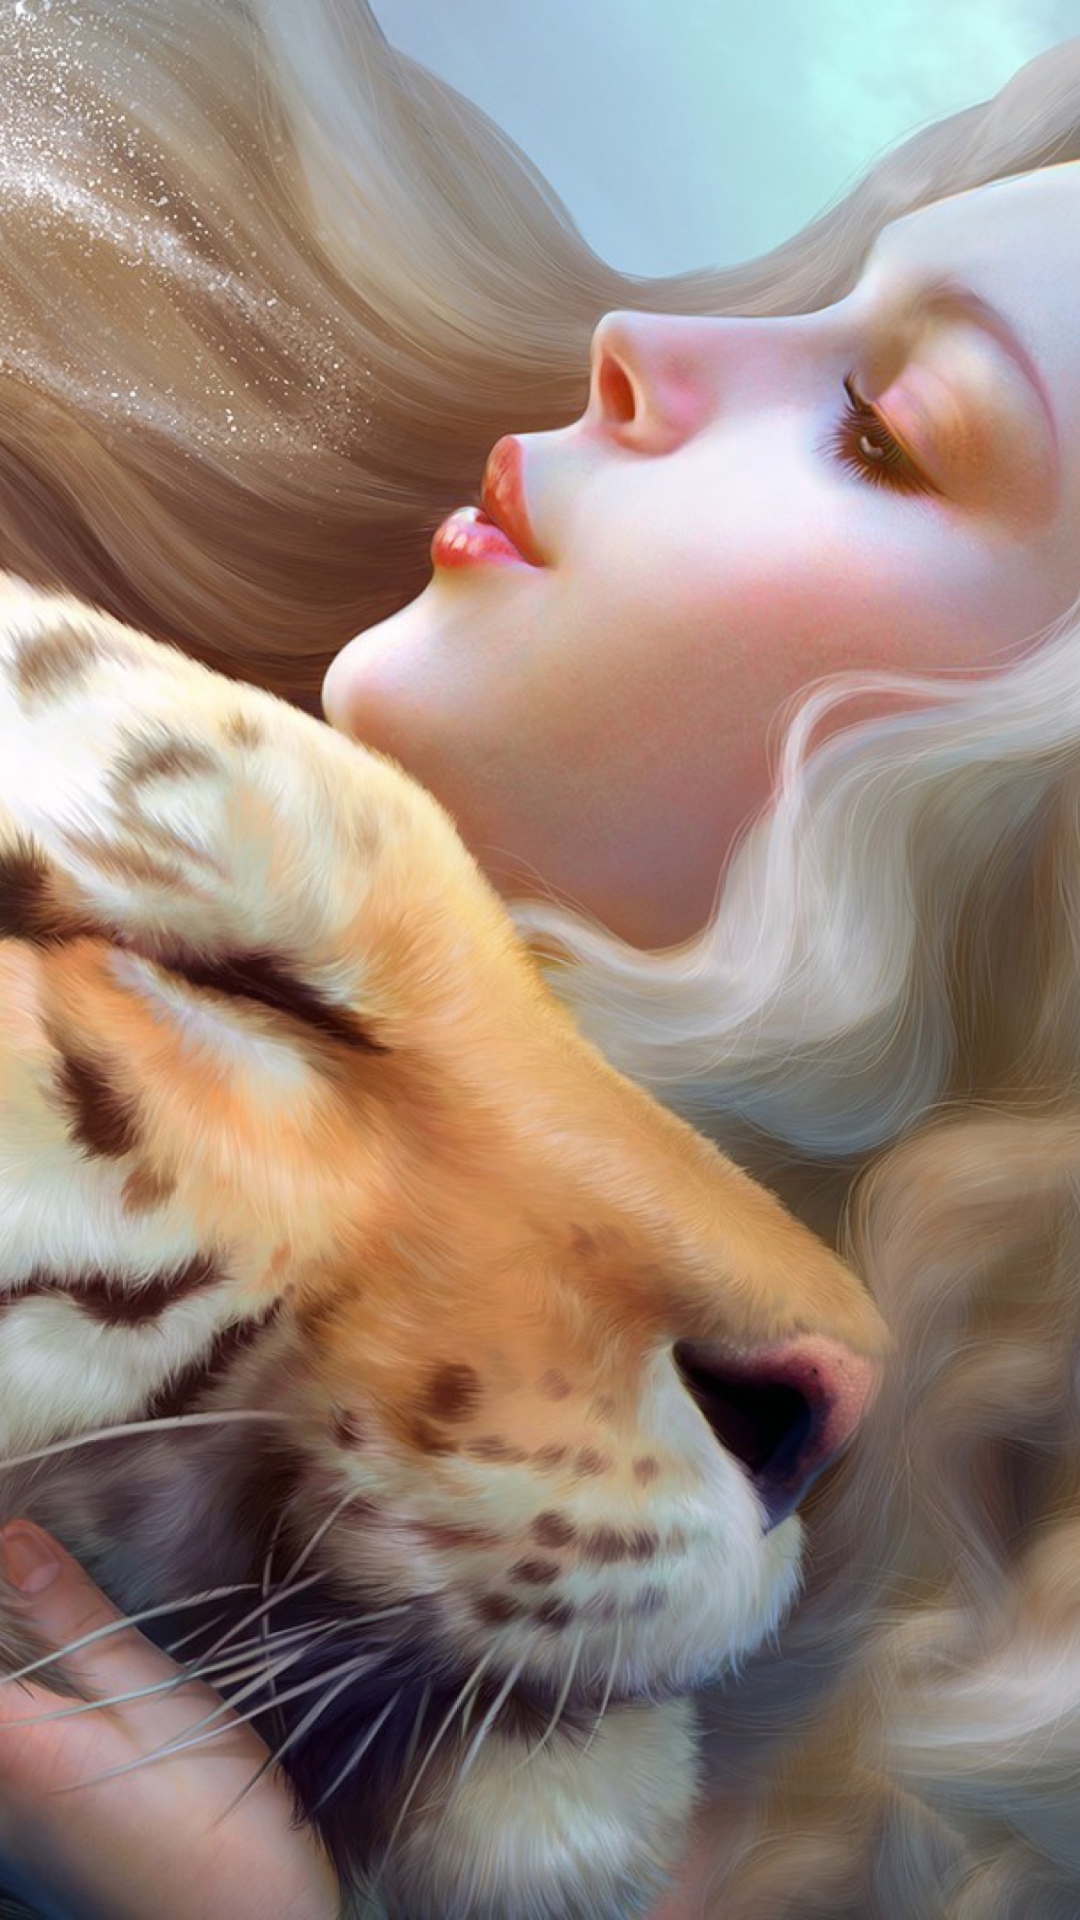 Girl And Tiger Art wallpaper 1080x1920